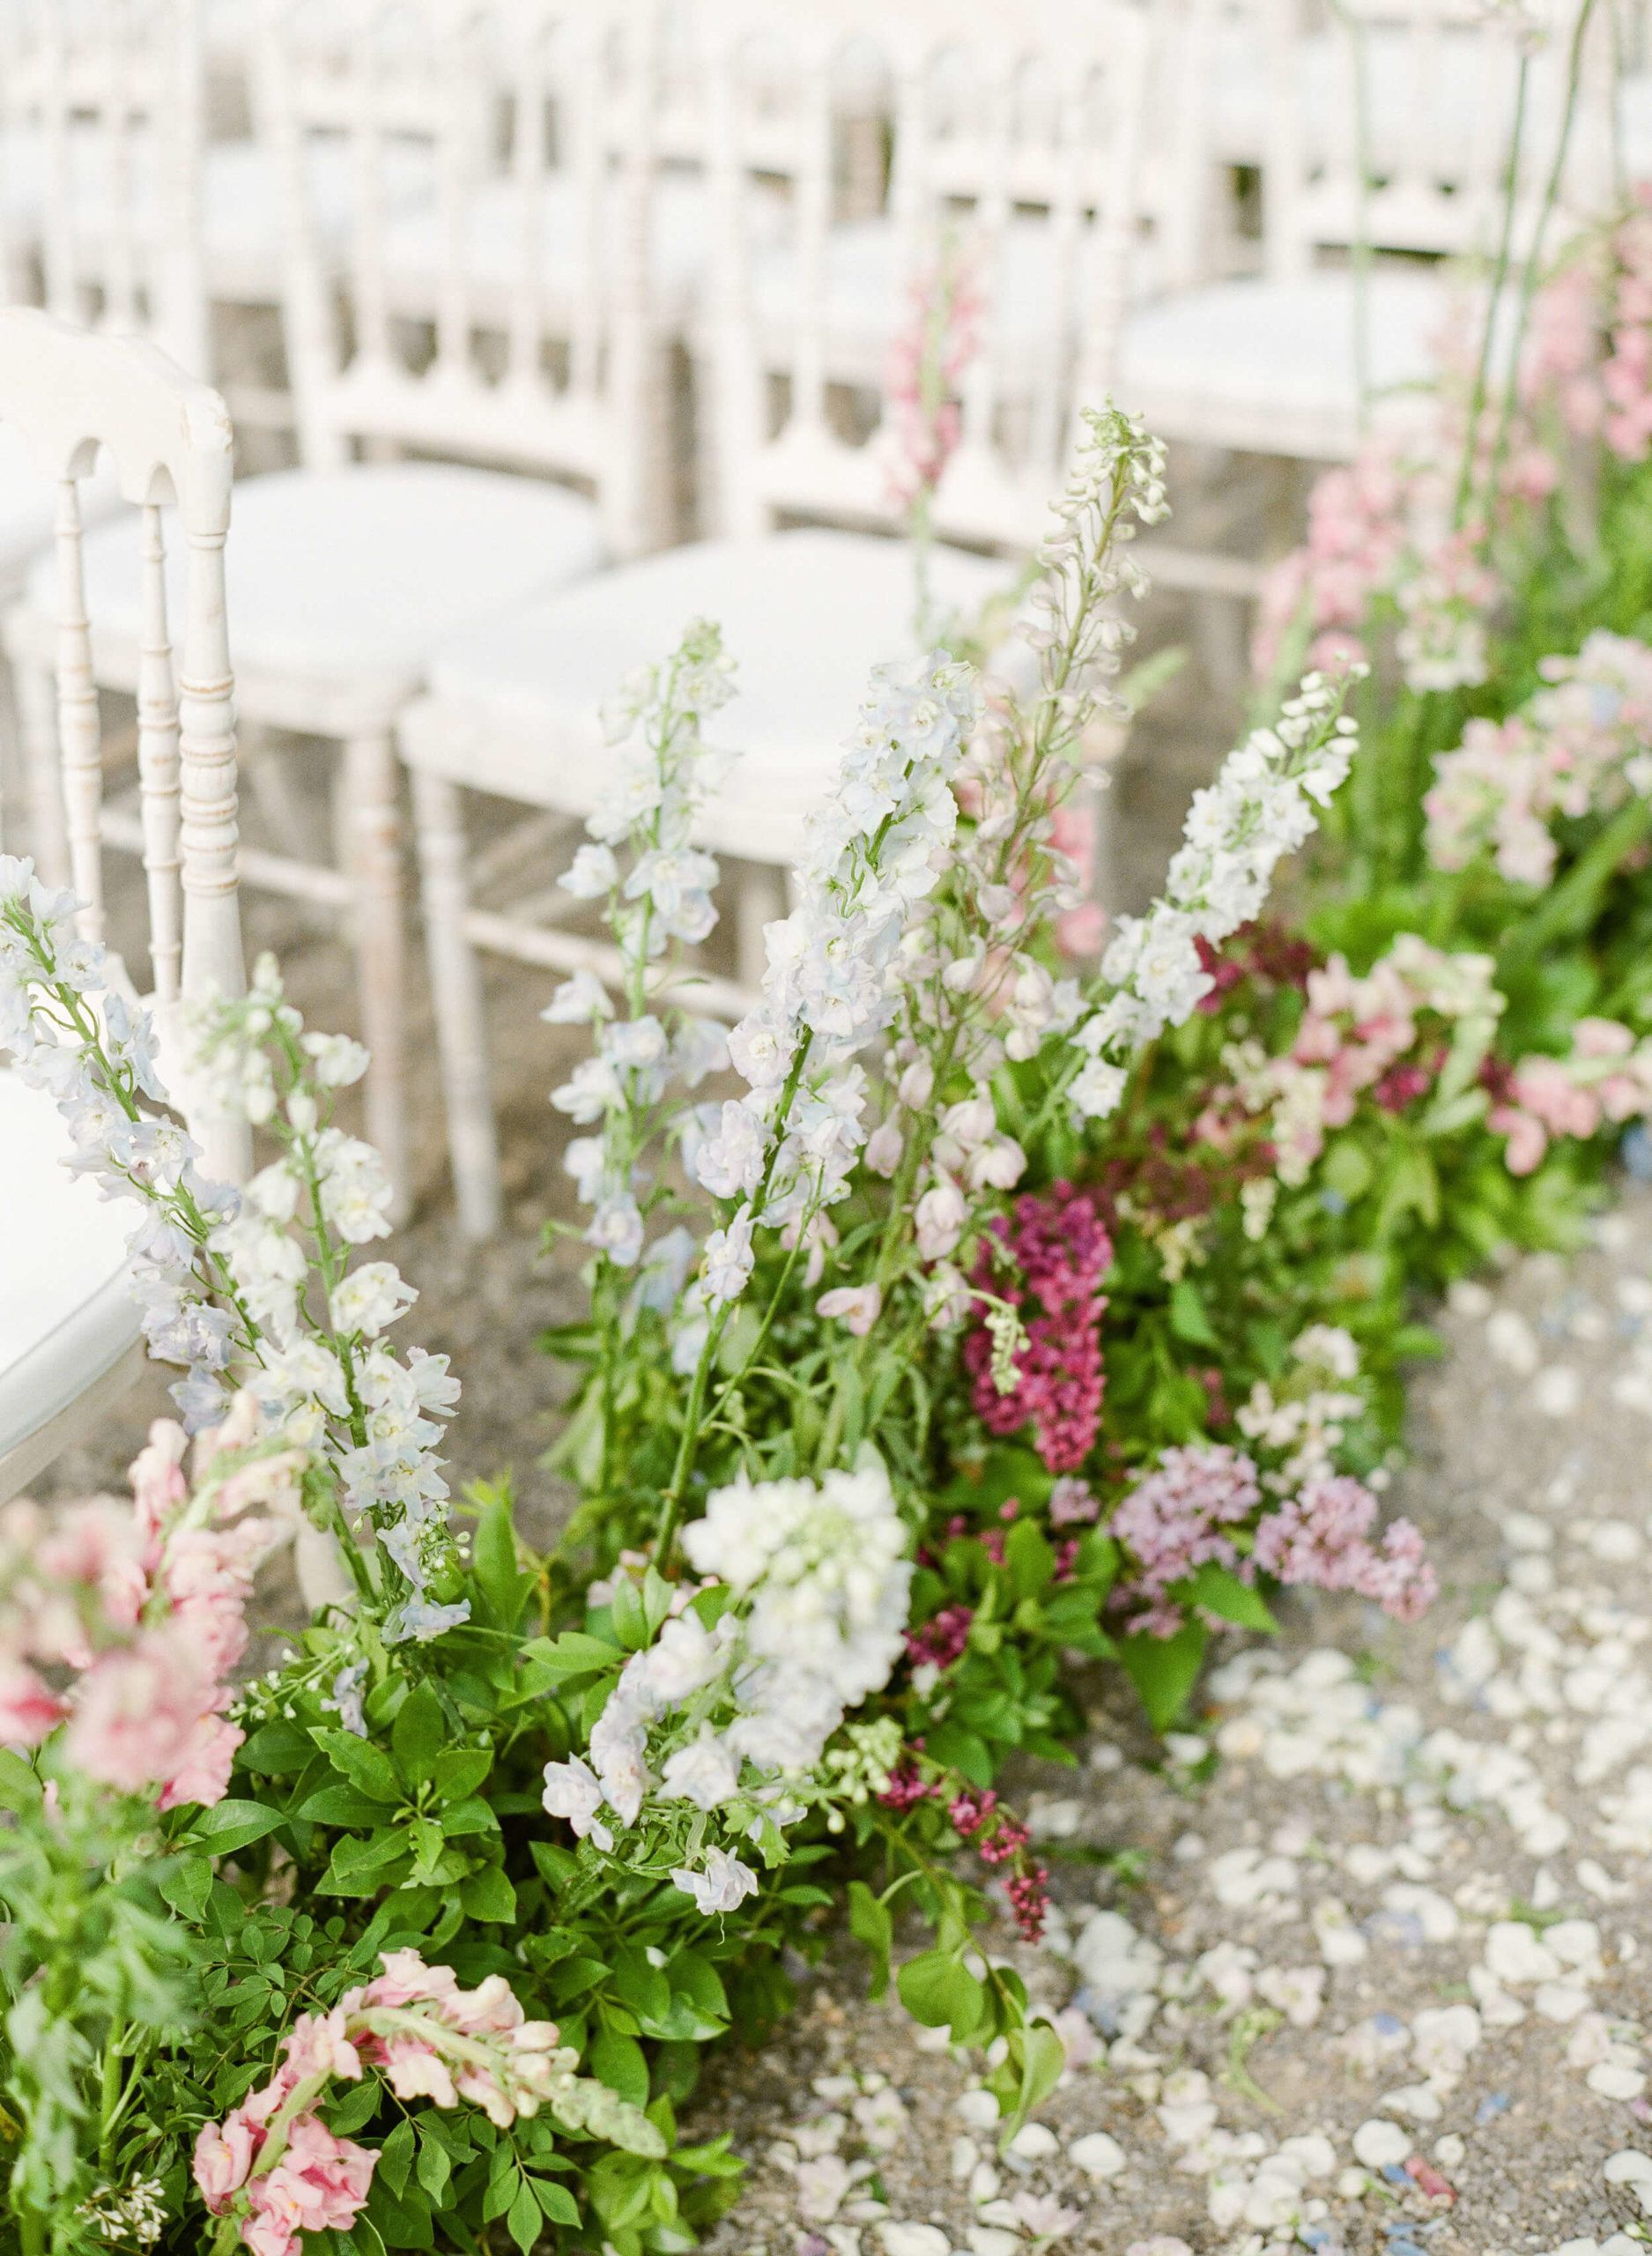 snapdragon florals at outdoor garden wedding ceremony